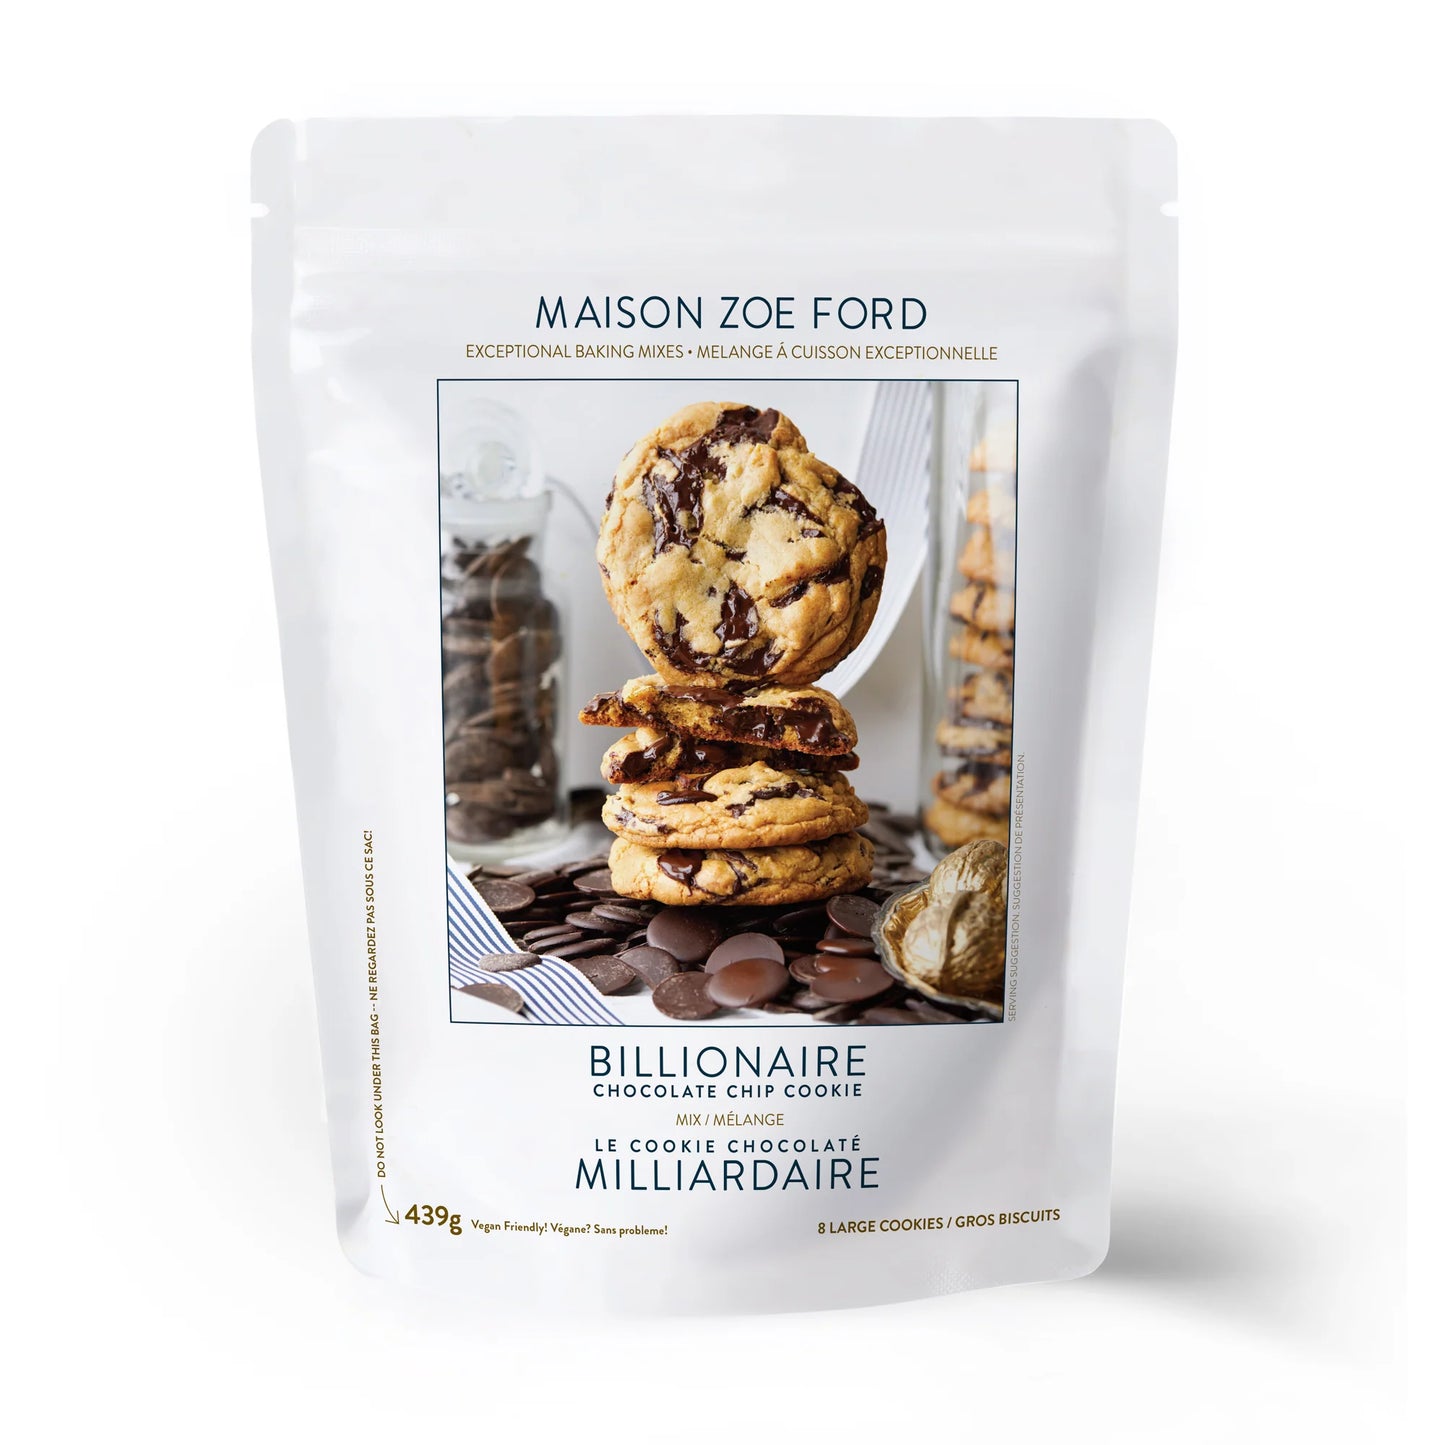 Maison Zoe Ford - Billionaire Chocolate Chip Cookie Mix